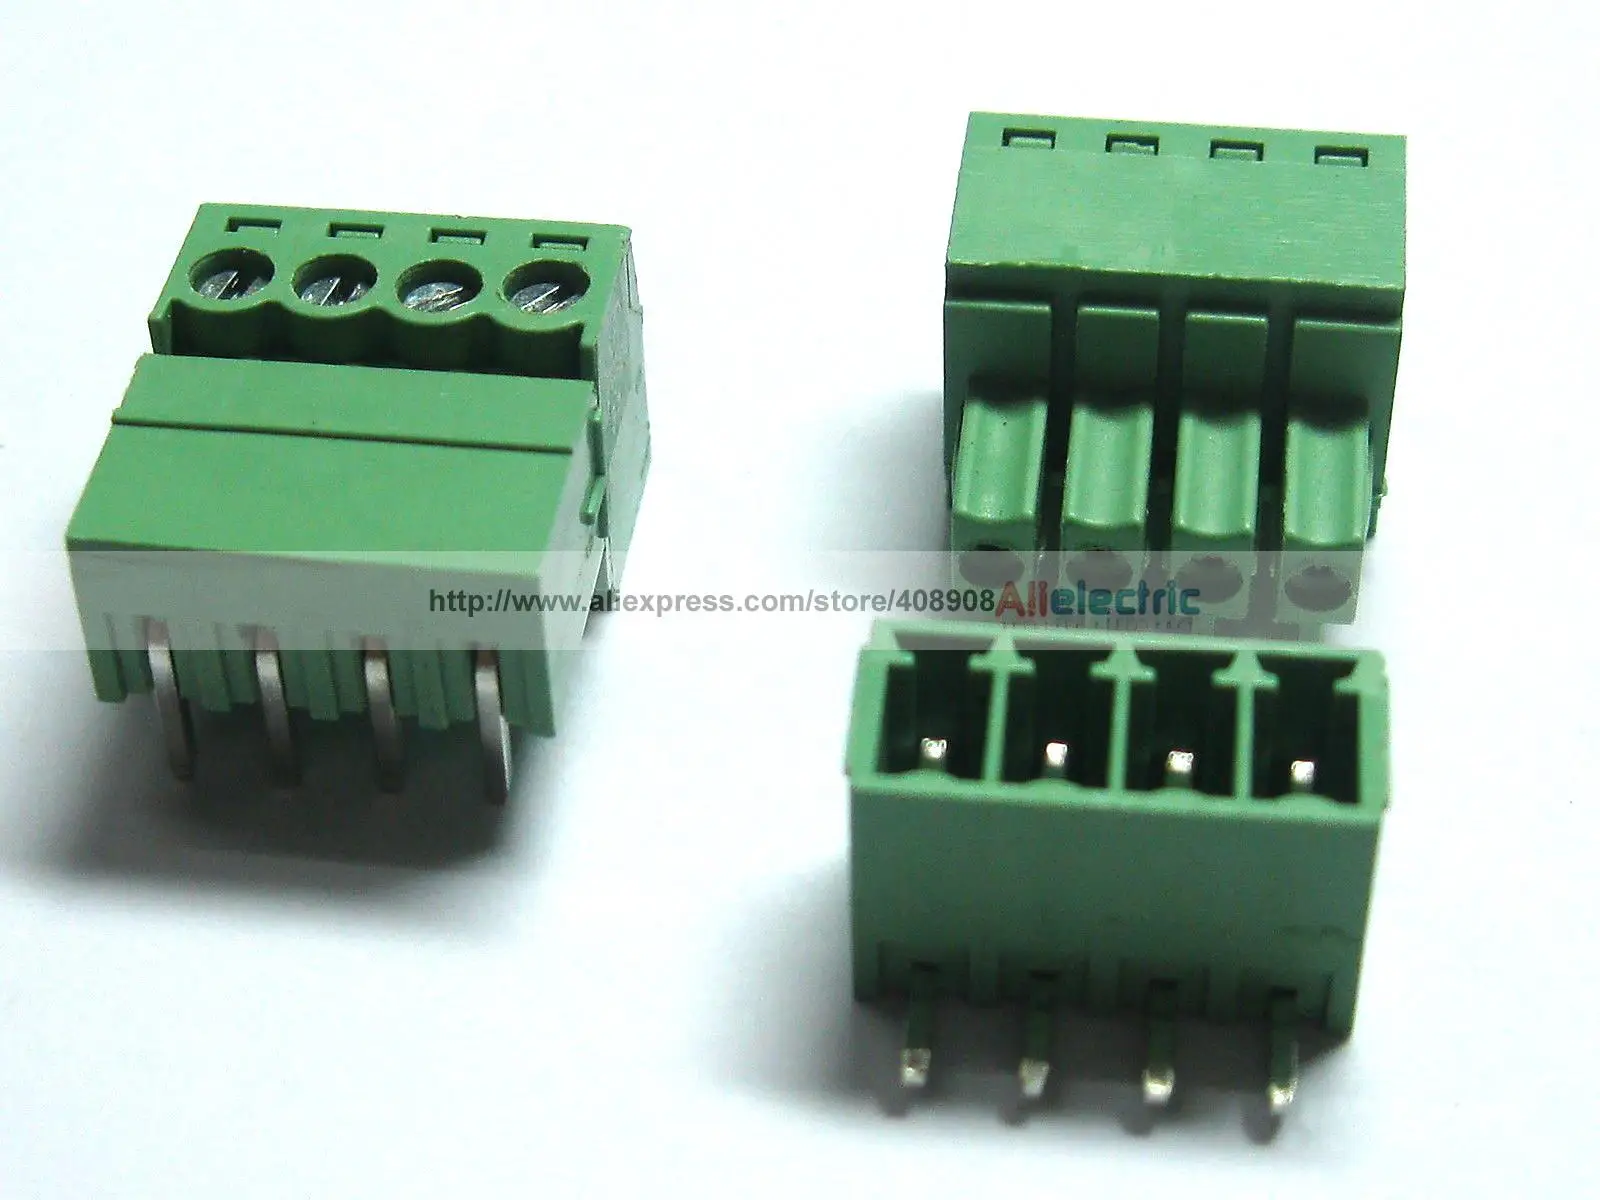 

100 Pcs/lot Screw Terminal Block Connector 3.81mm Angle 4 Pin Green Pluggable Type